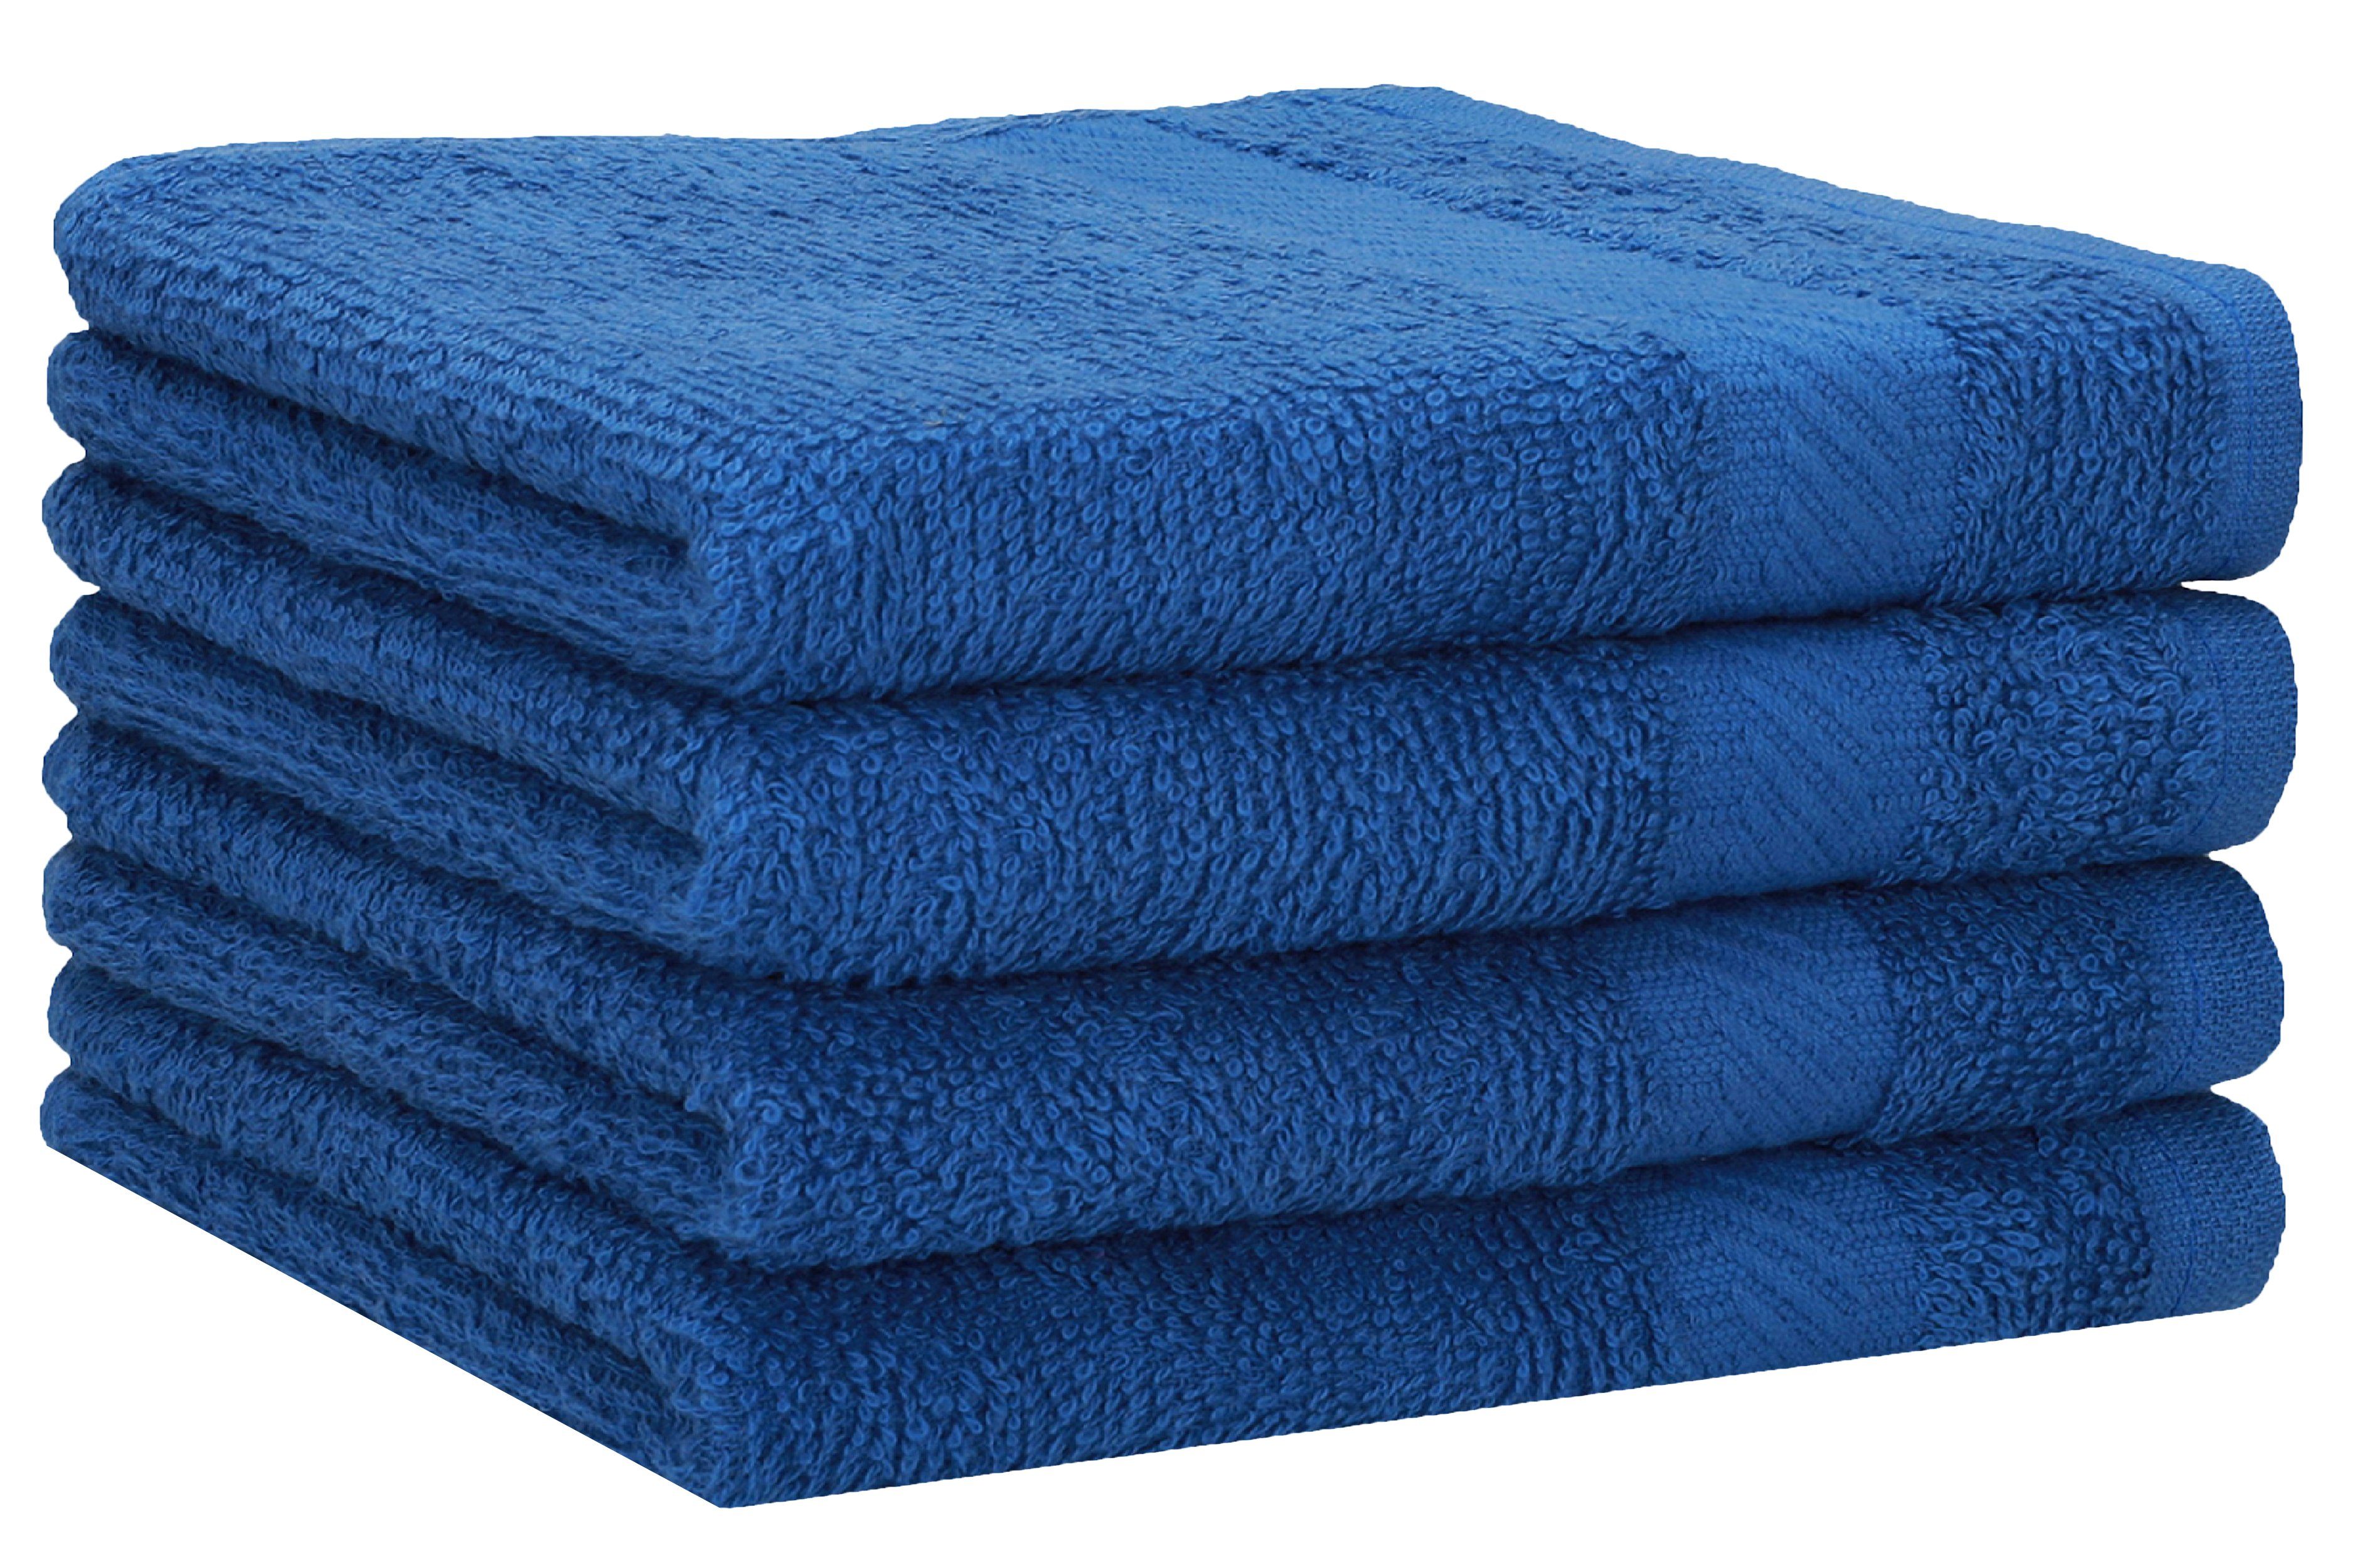 Betz Duschtücher 4 Stück Duschtücher Set Palermo Größe 70x140 cm 100% Baumwolle Badetuch Duschhandtuch Sporthandtuch, 100% Baumwolle blau